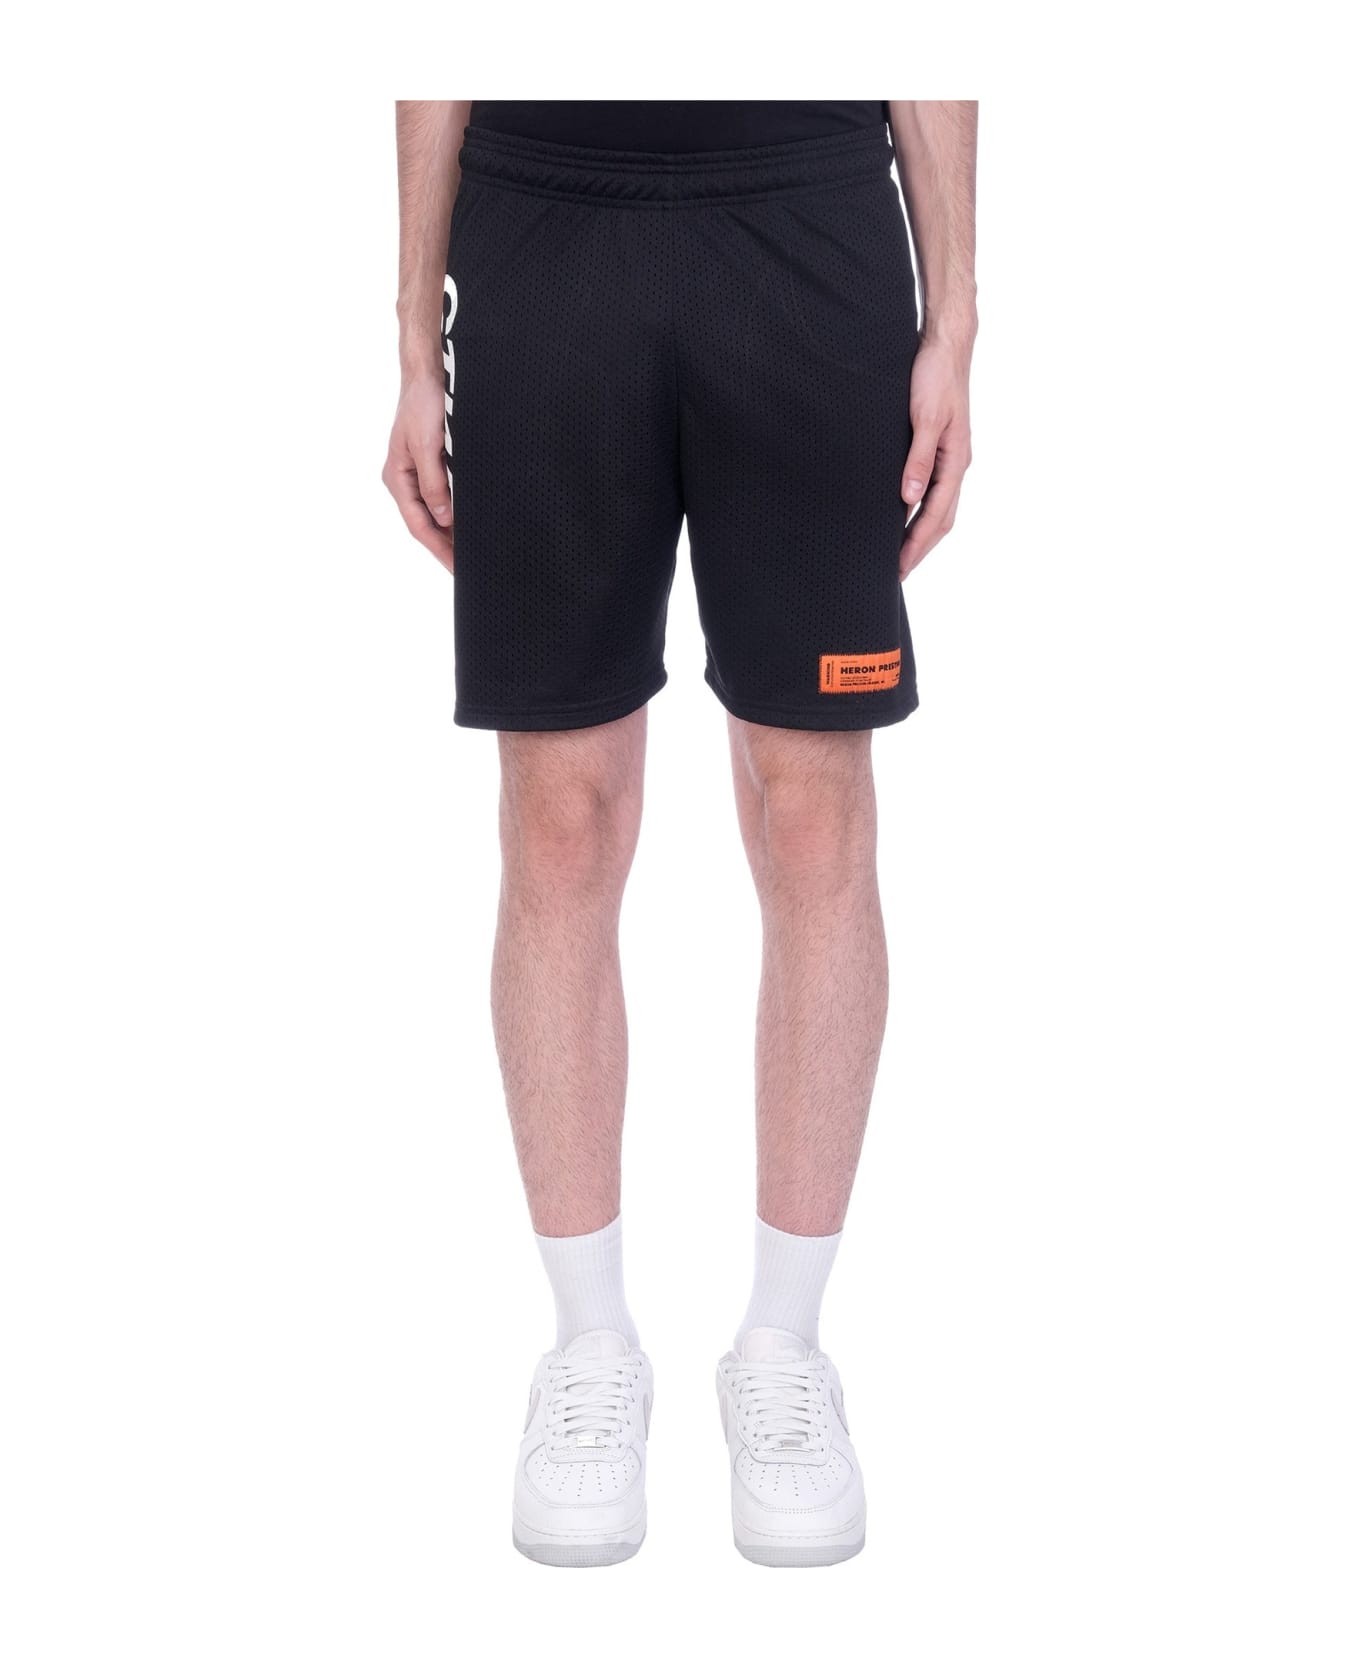 HERON PRESTON Ctnmb Basket Shorts - Black